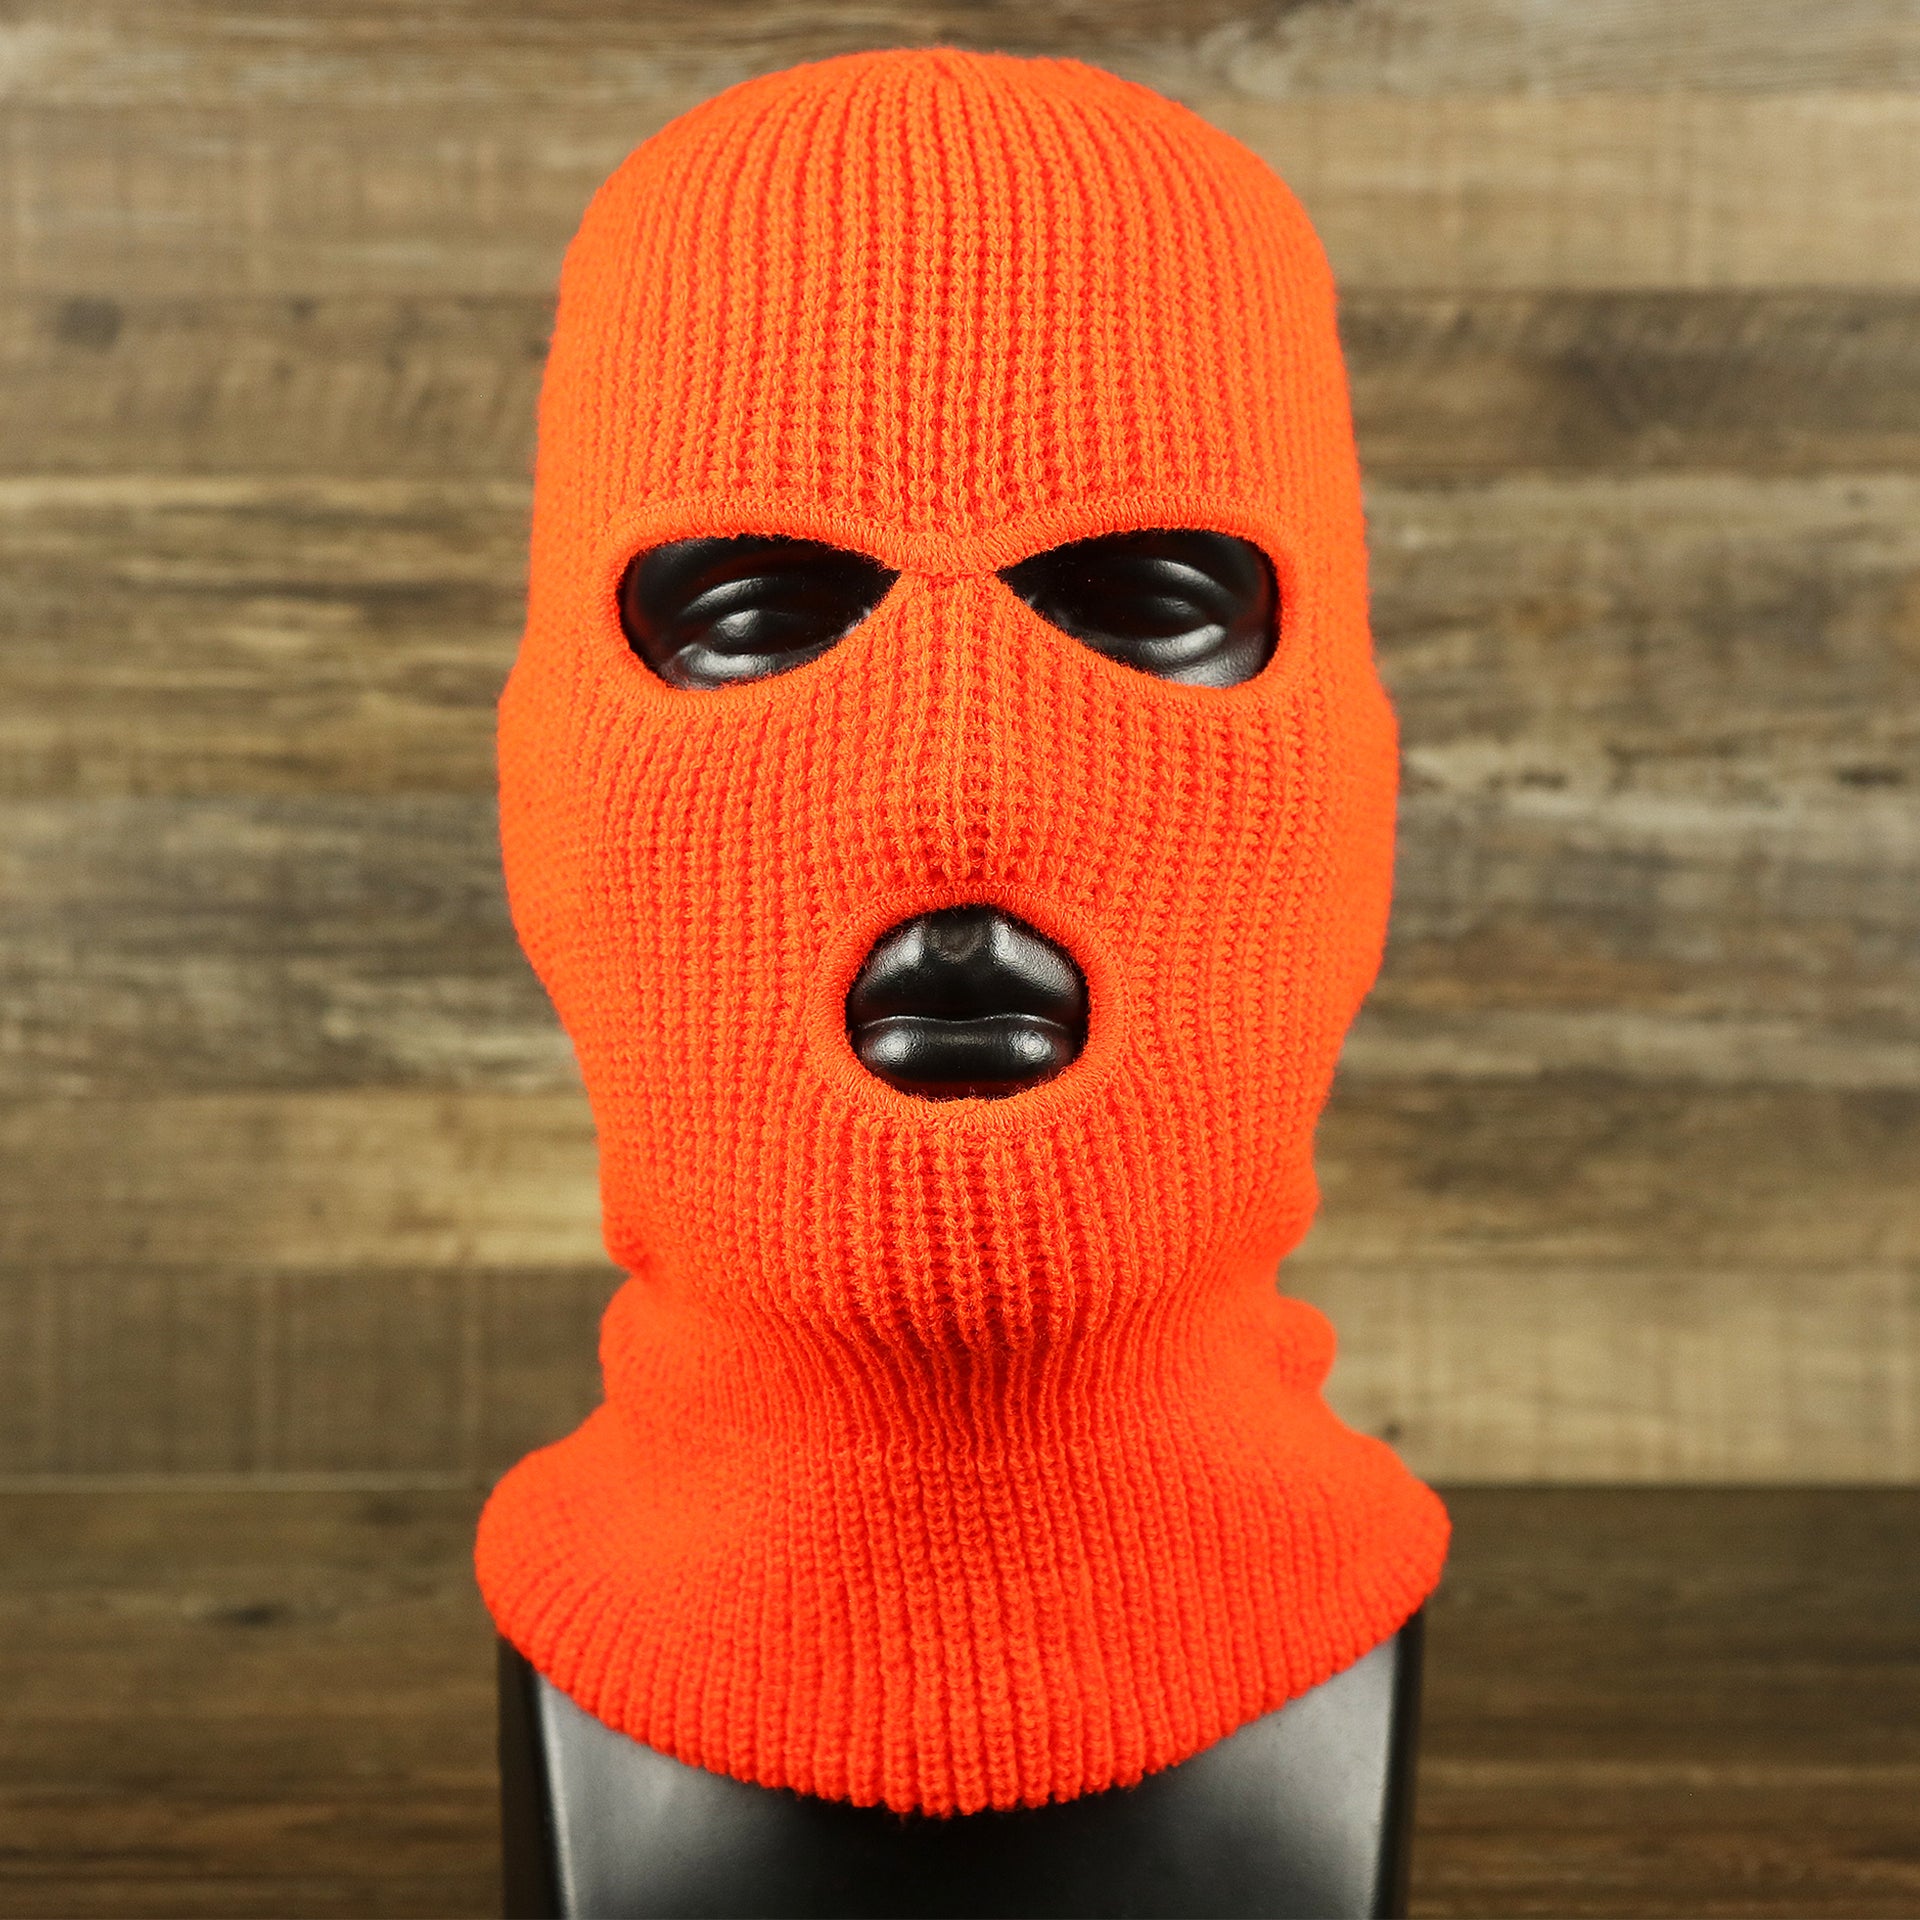 The front of the Safety Orange Snug Fit Three Hole Balaclava | Neon Orange Knit Ski Mask